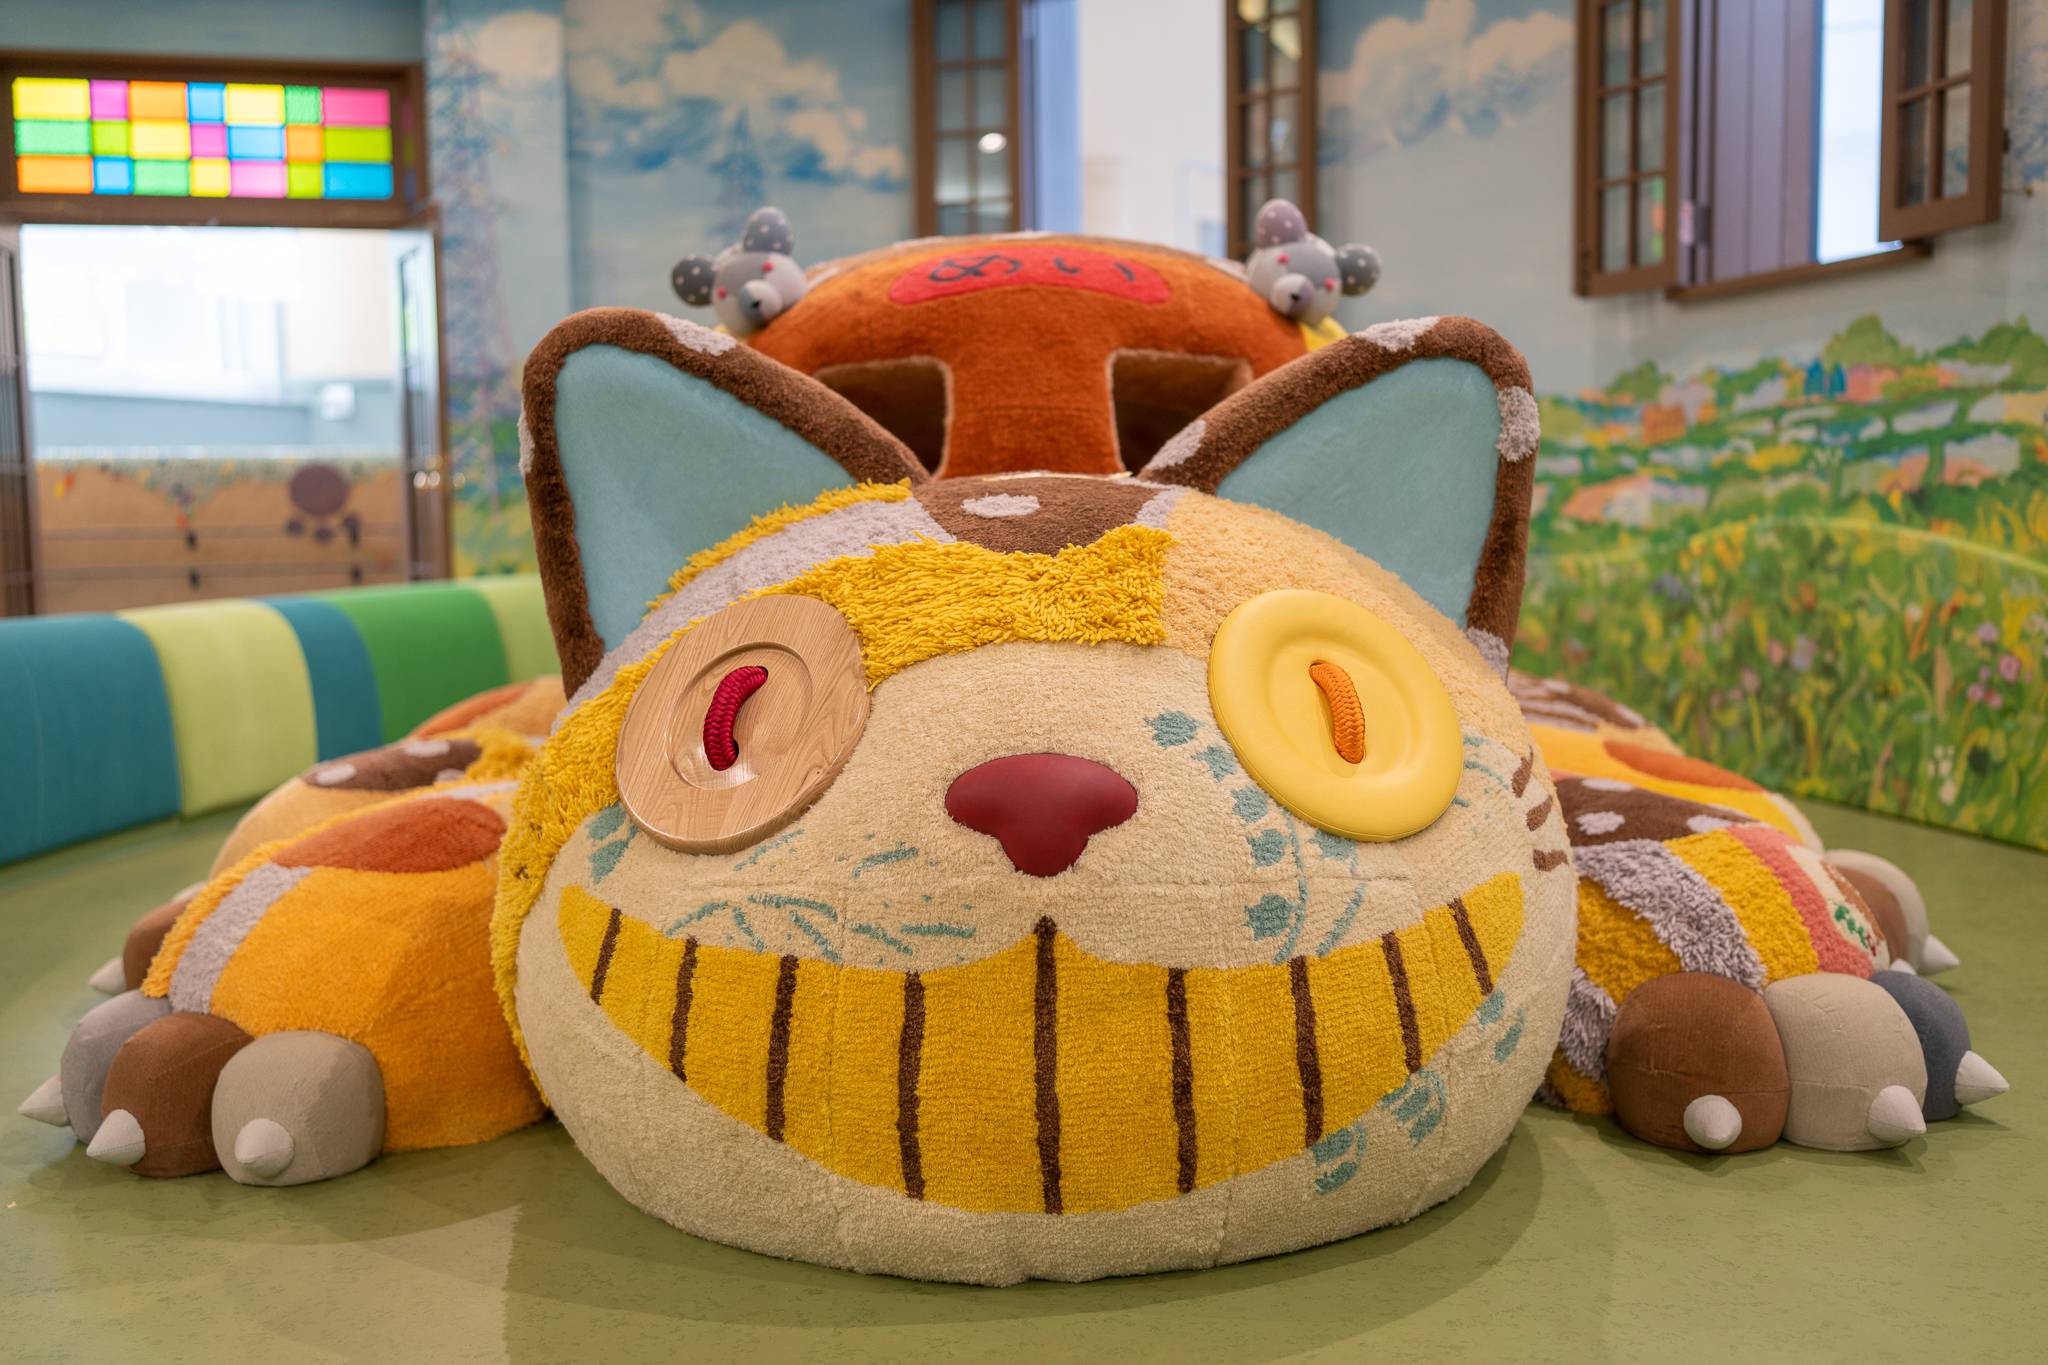 The Cat Bus character from 'My Neighbor Totoro' inside a playroom in Ghibli's Grand Warehouse at Ghibli Park | © STUDIO GHIBLI / VIA KYODO